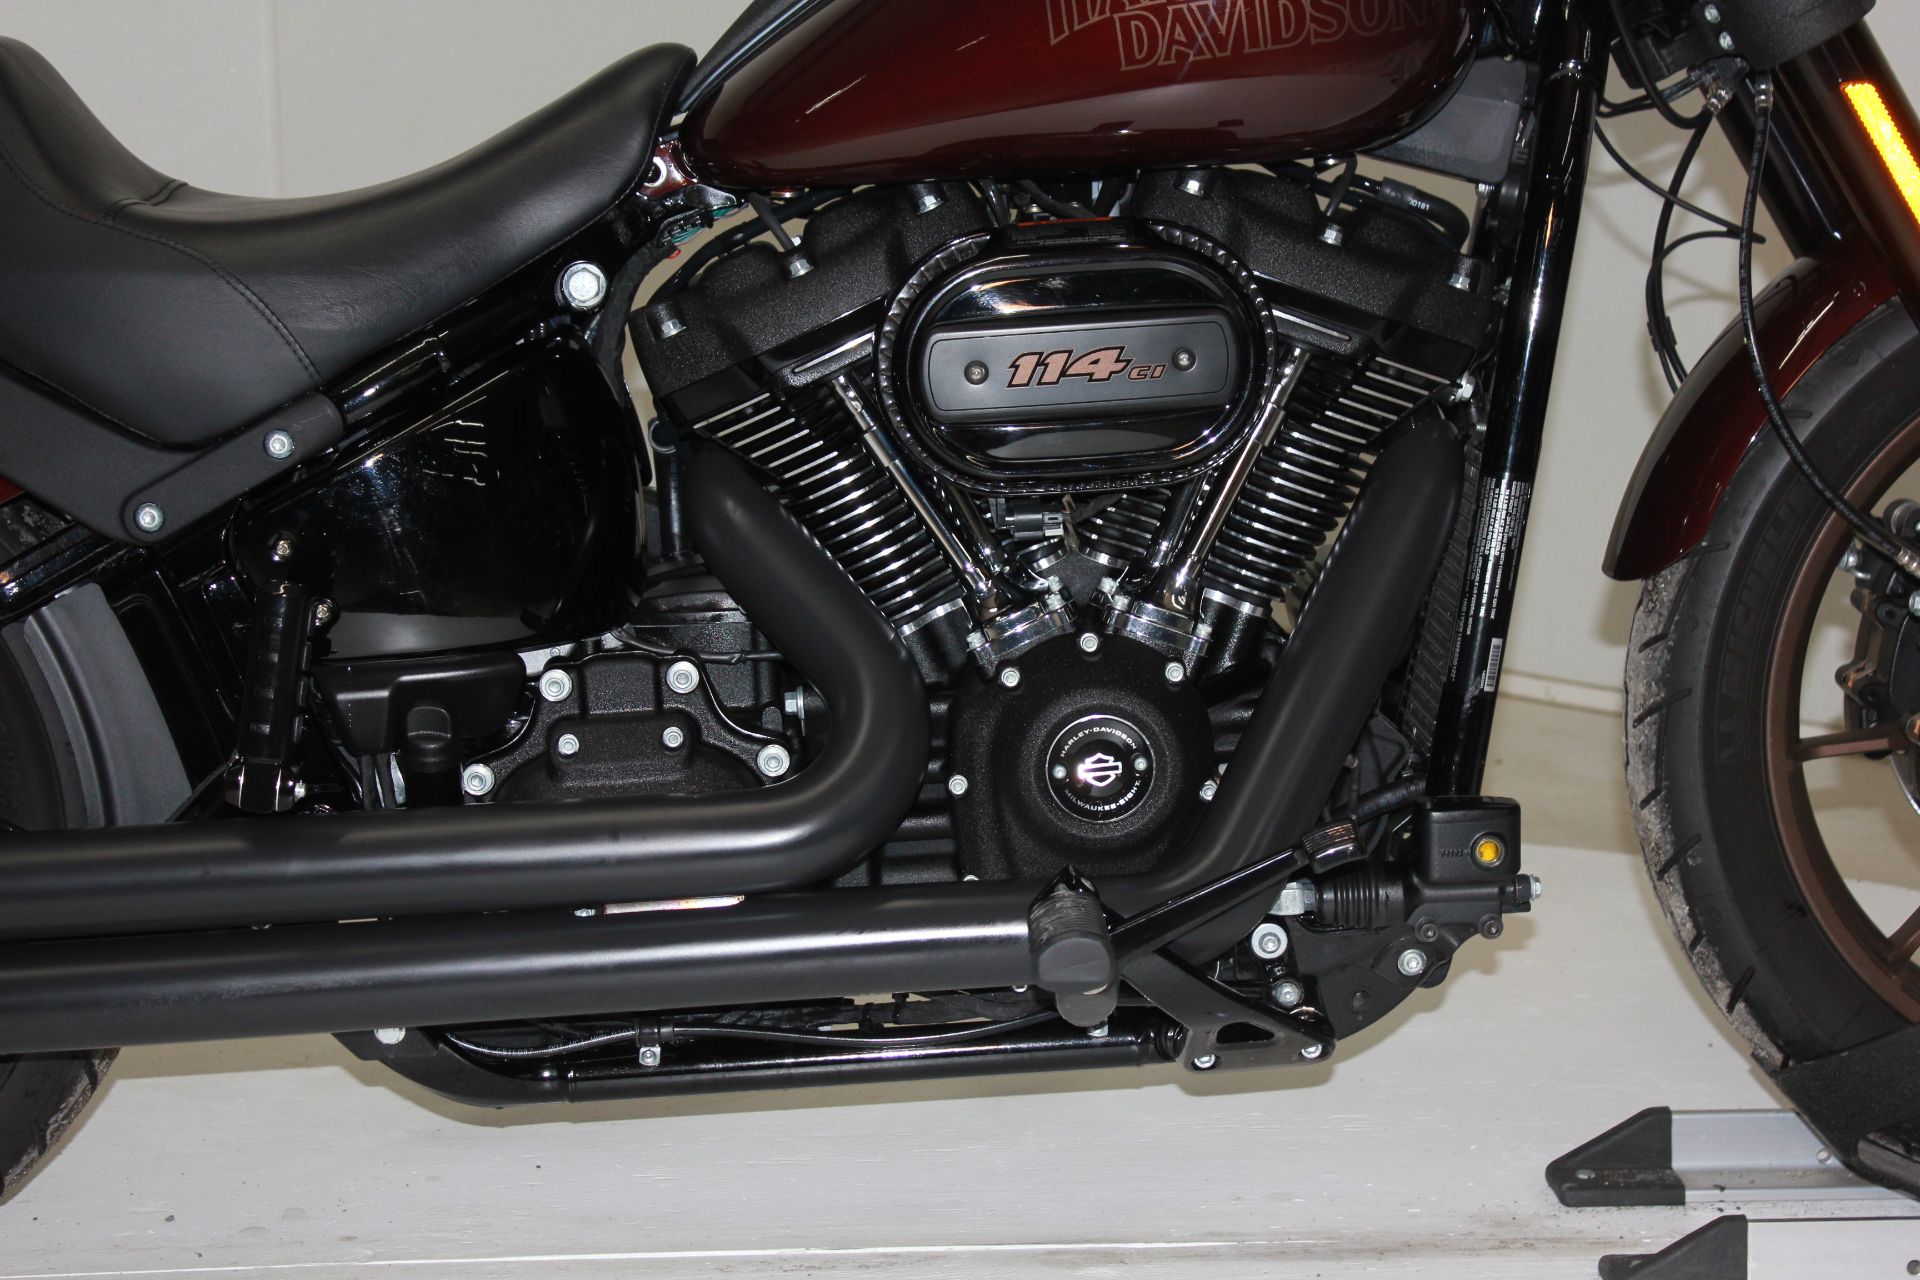 2021 Harley-Davidson Low Rider®S in Pittsfield, Massachusetts - Photo 14